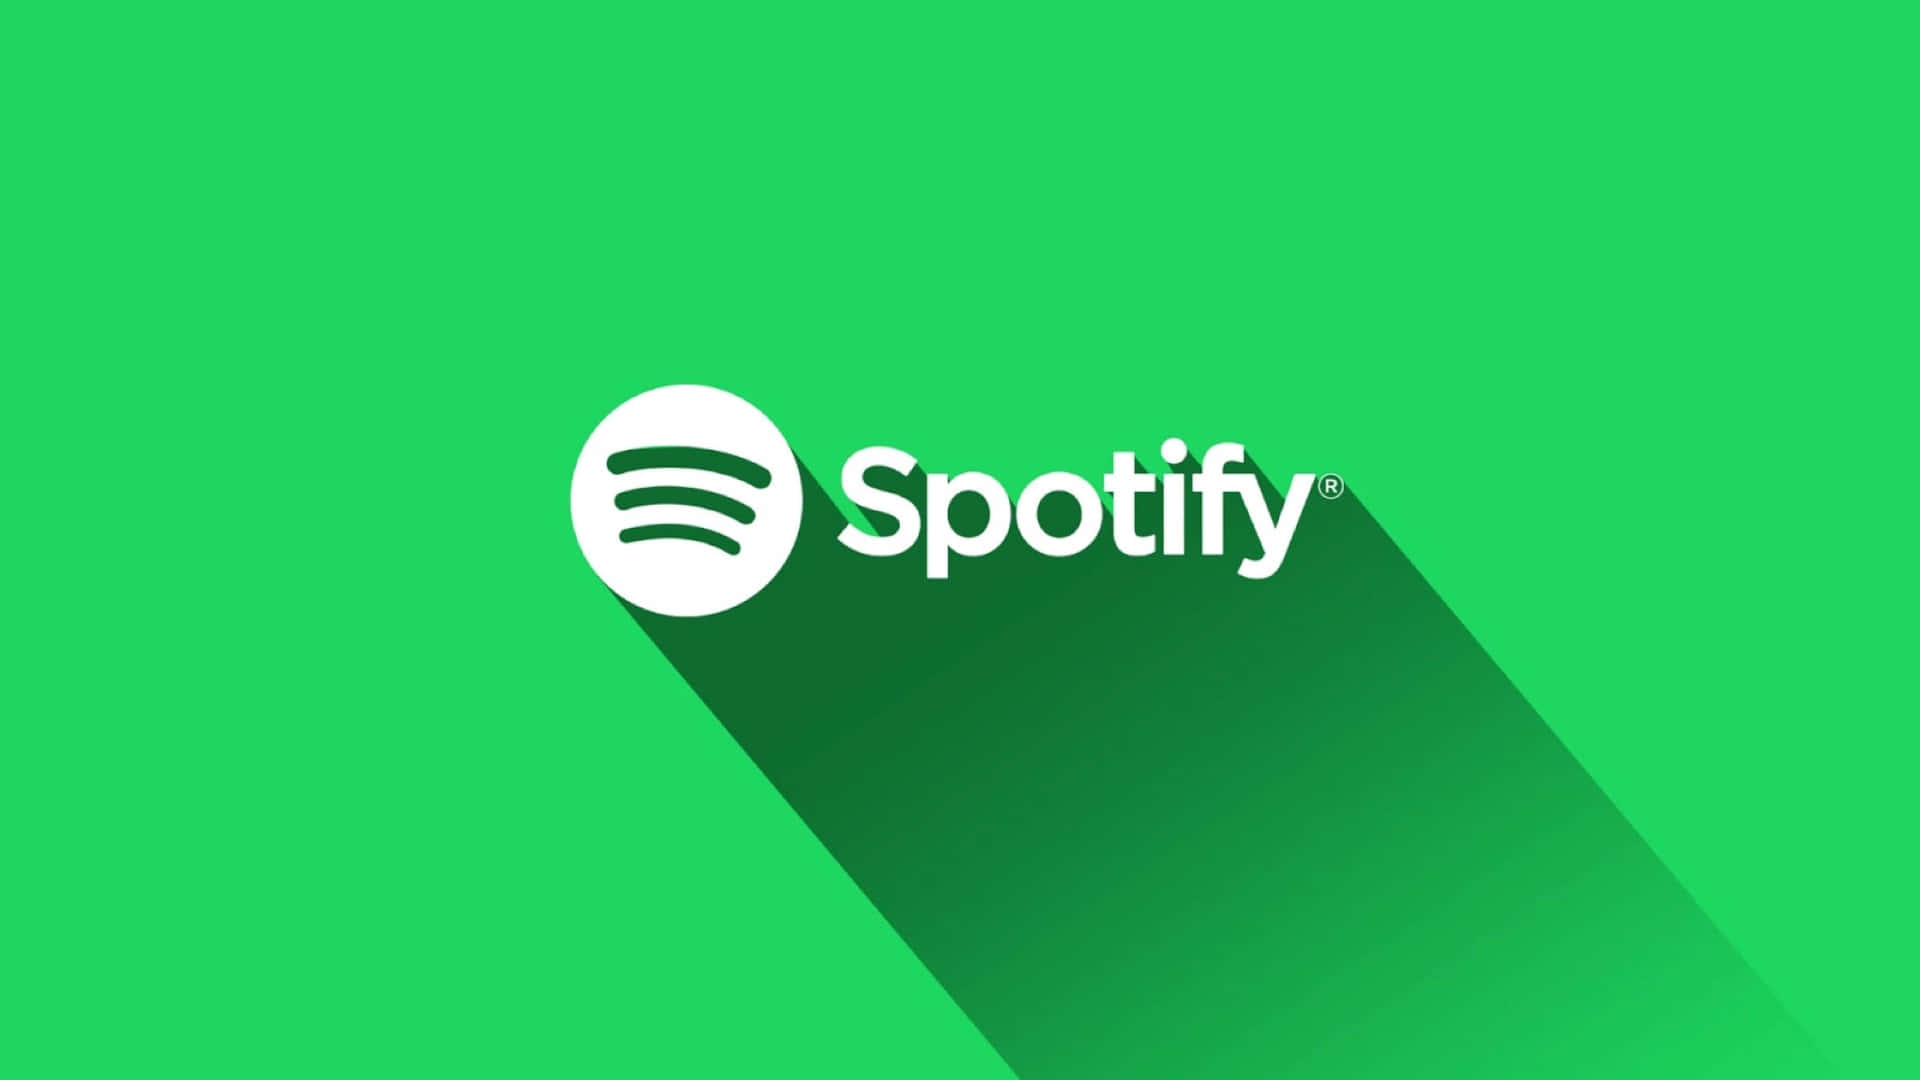 Spotify Logo On A Green Background